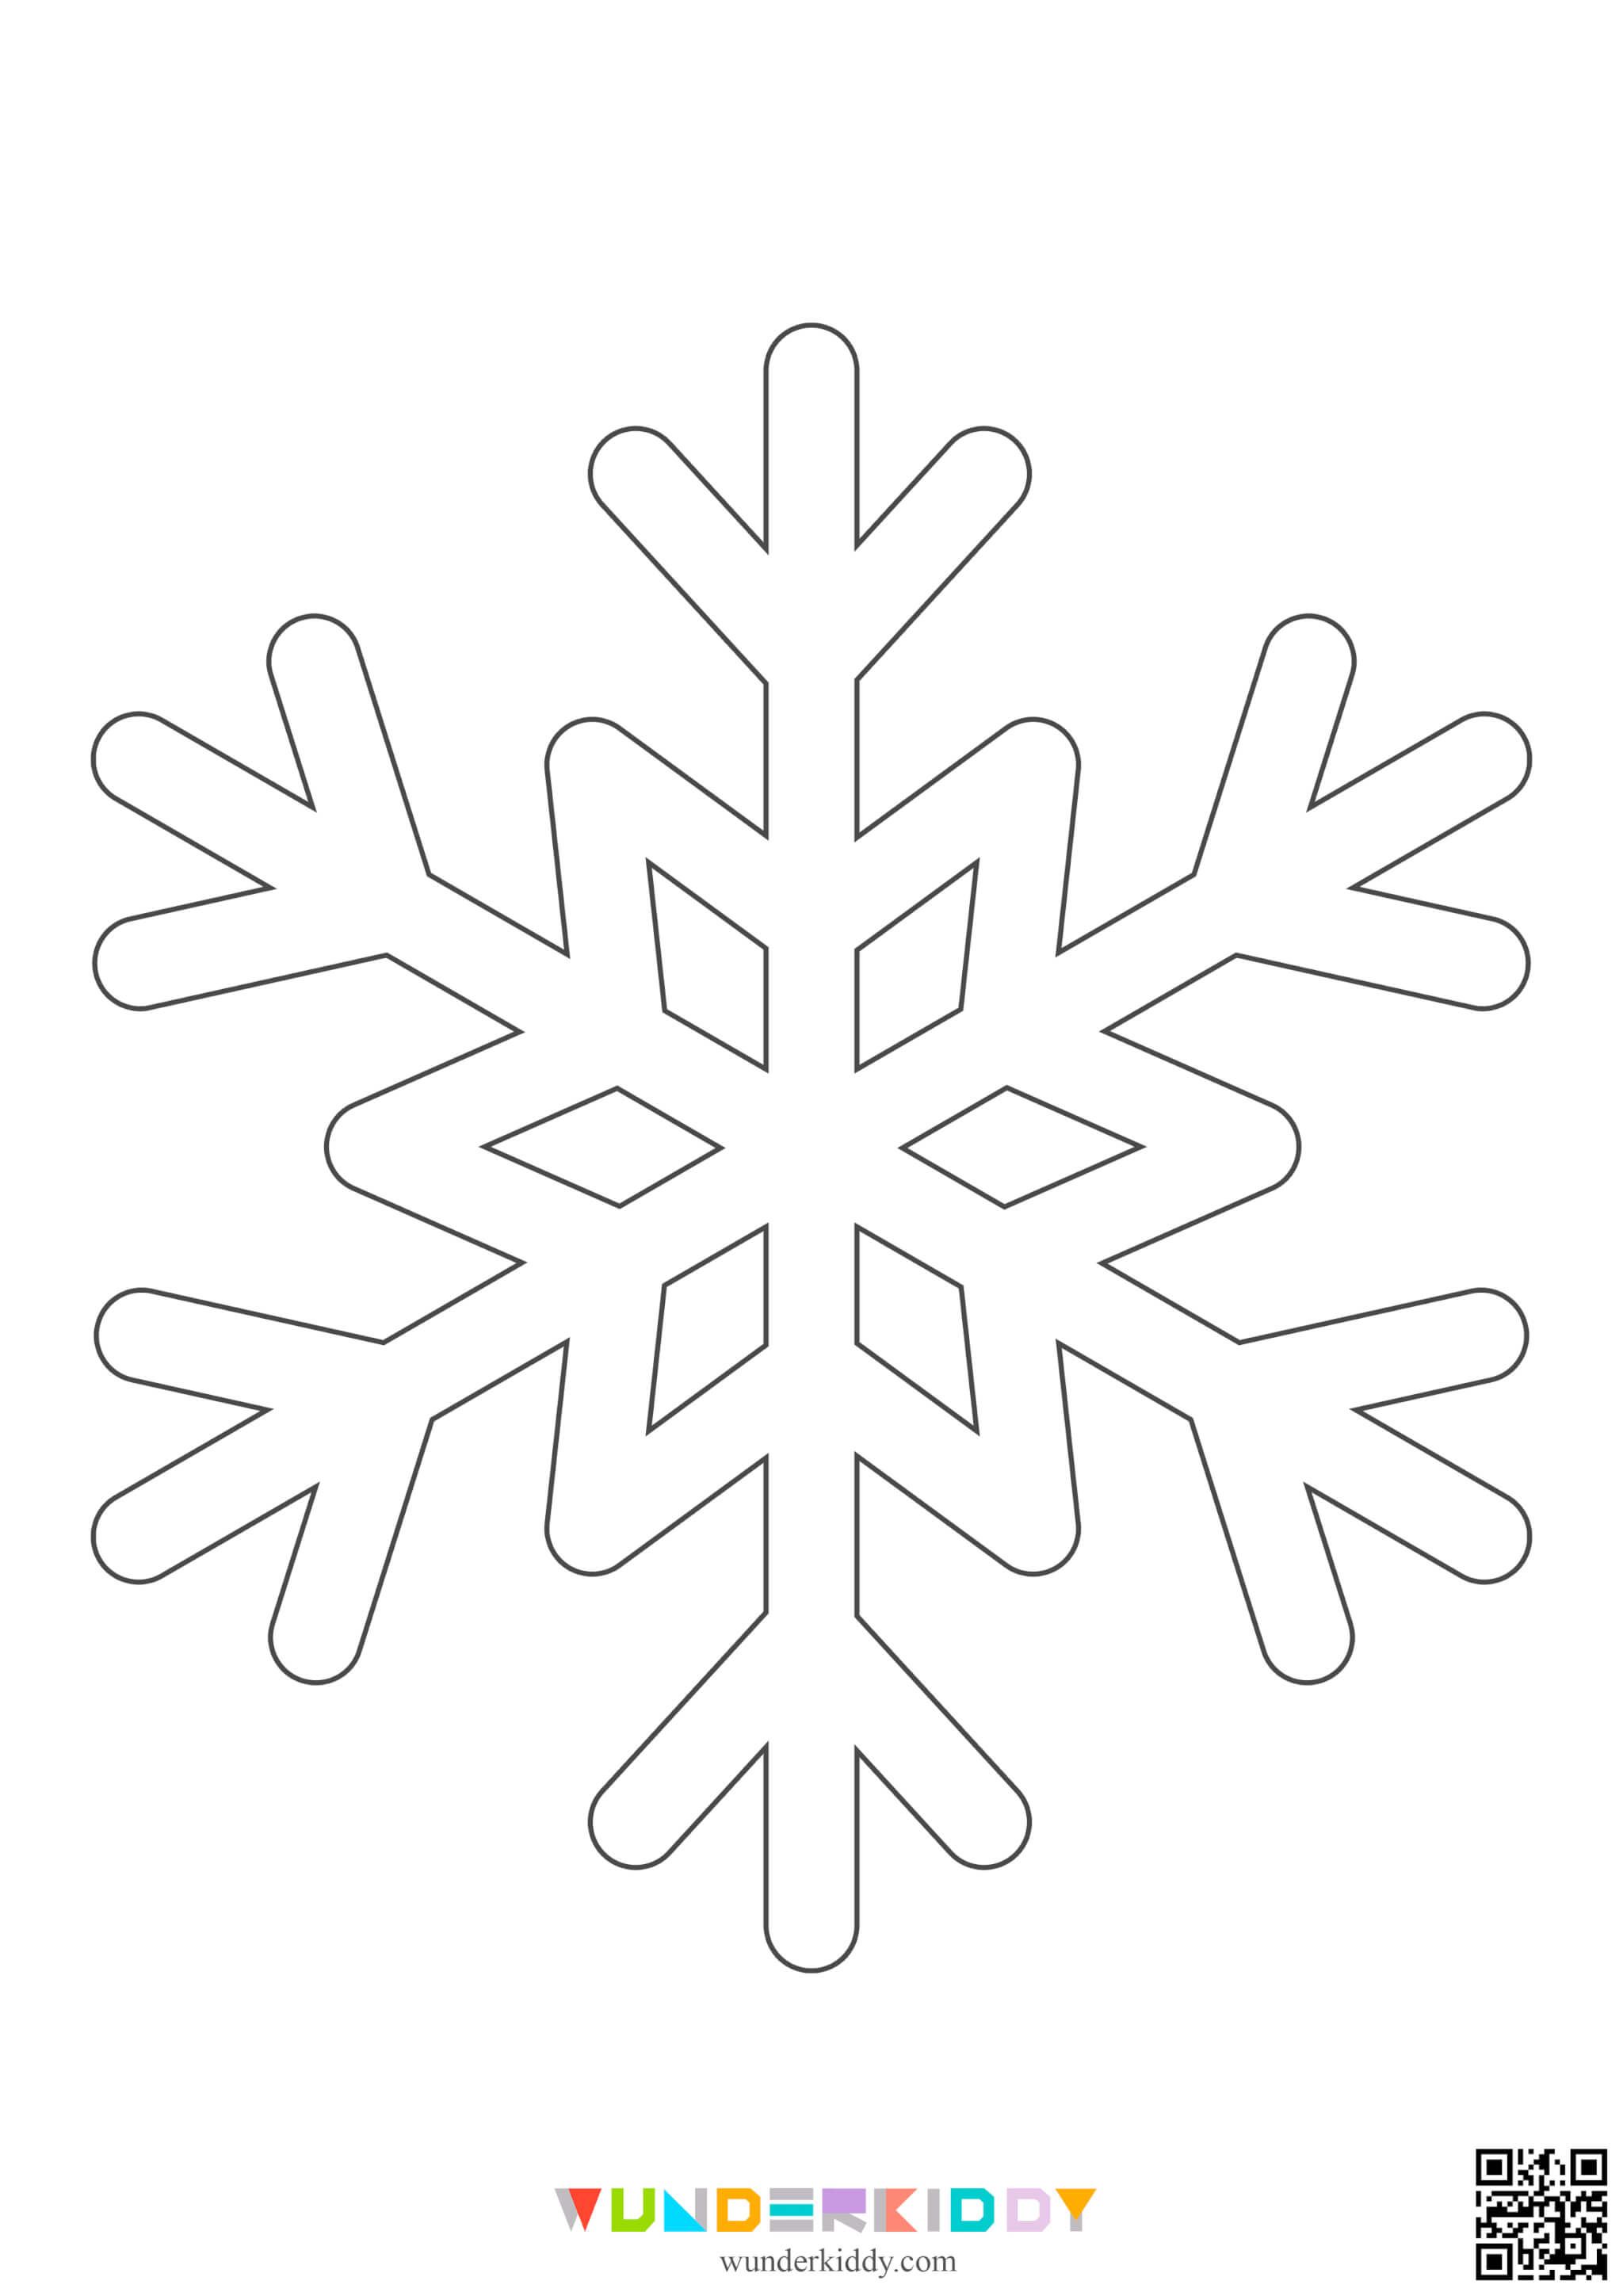 Snowflake Stencil Patterns - Image 16